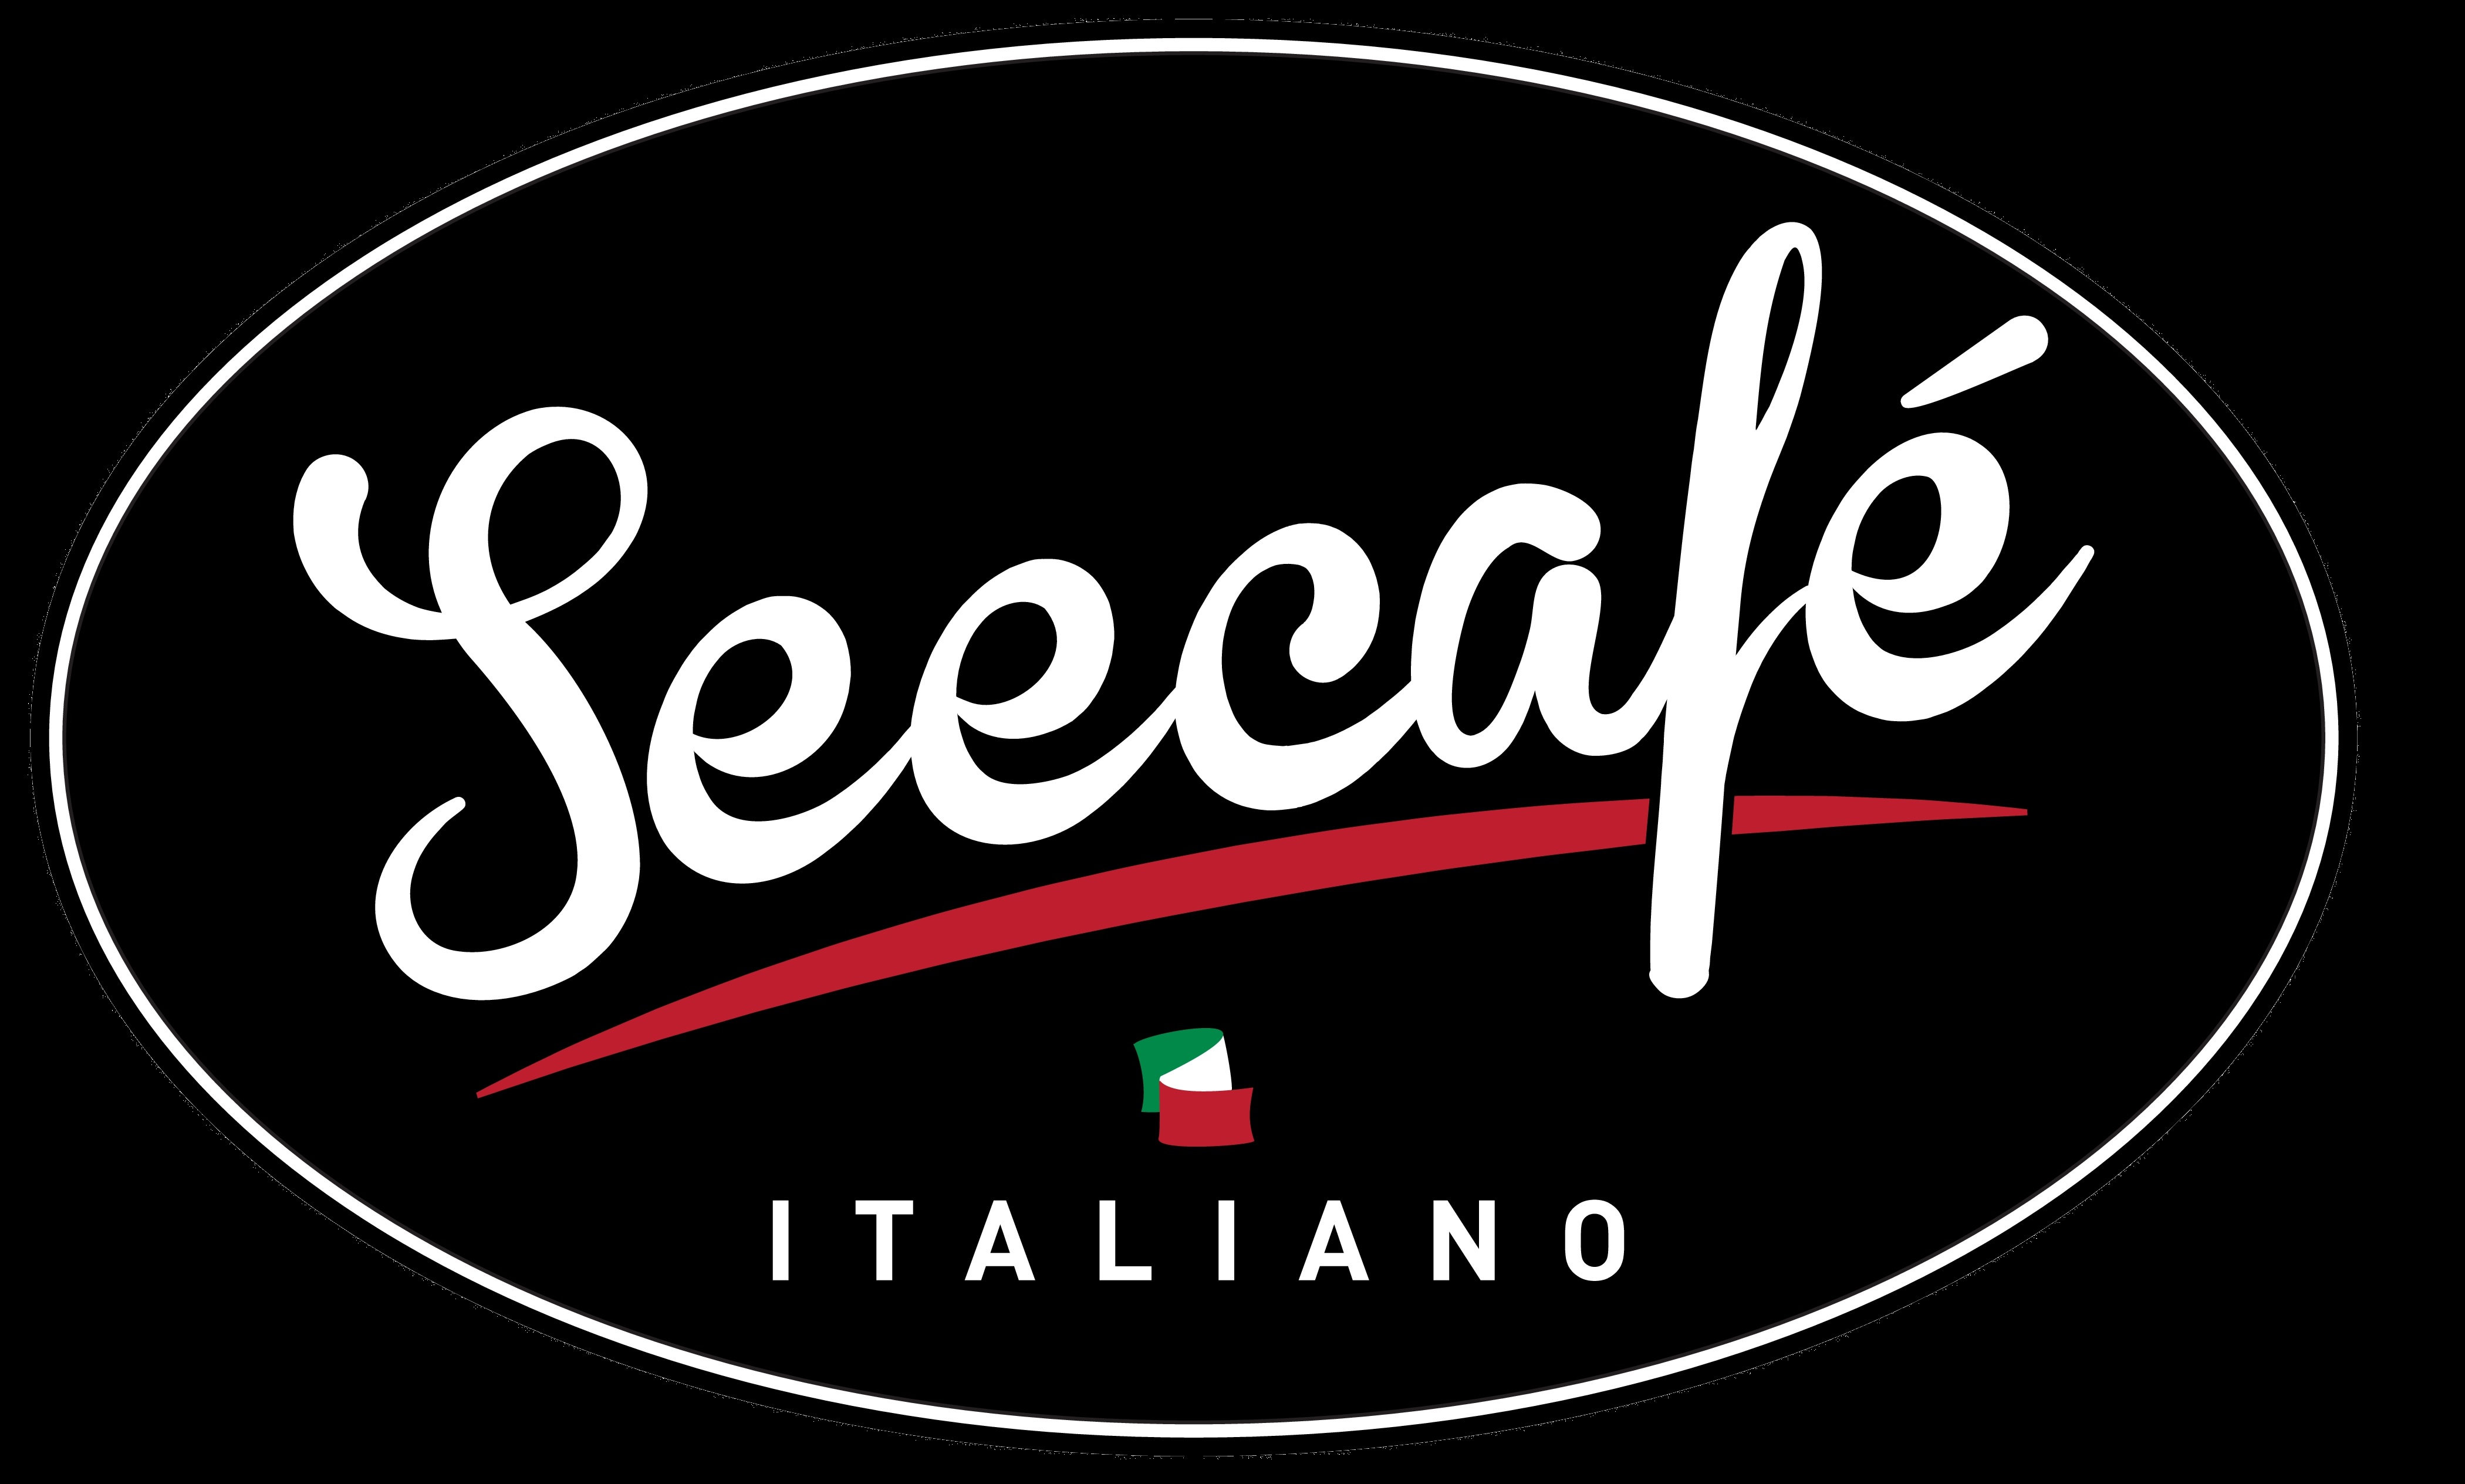 (c) Seecafe-italiano.de